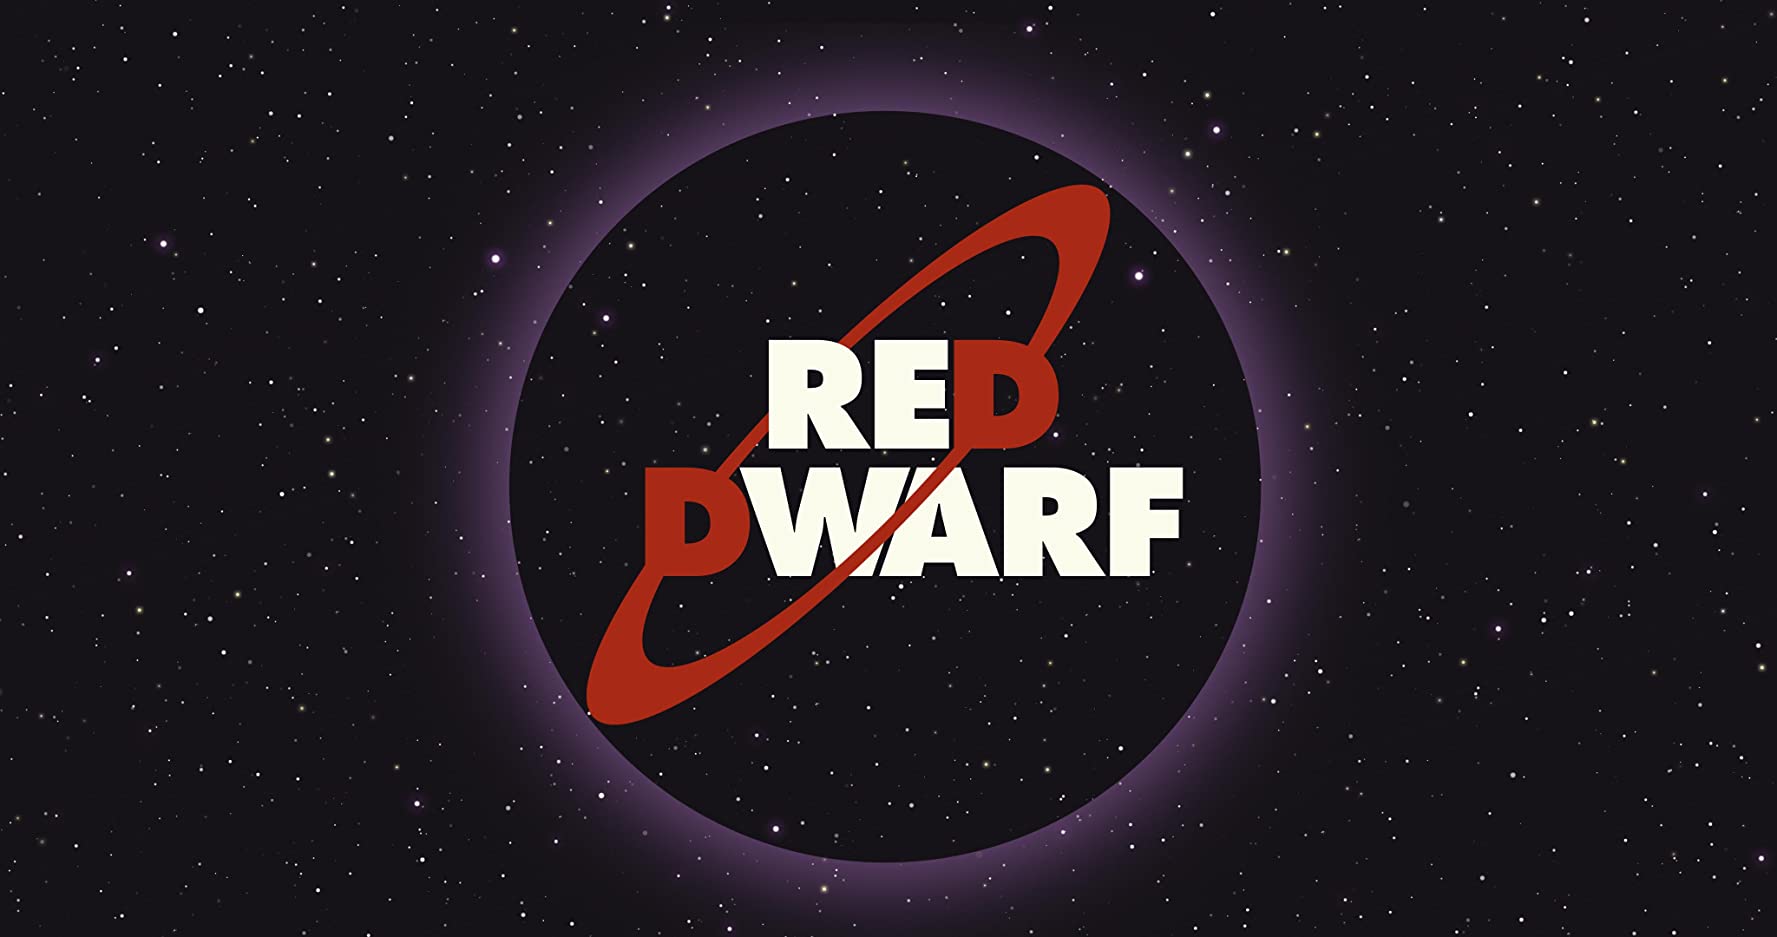 Red Dwarf - (1988 show) image